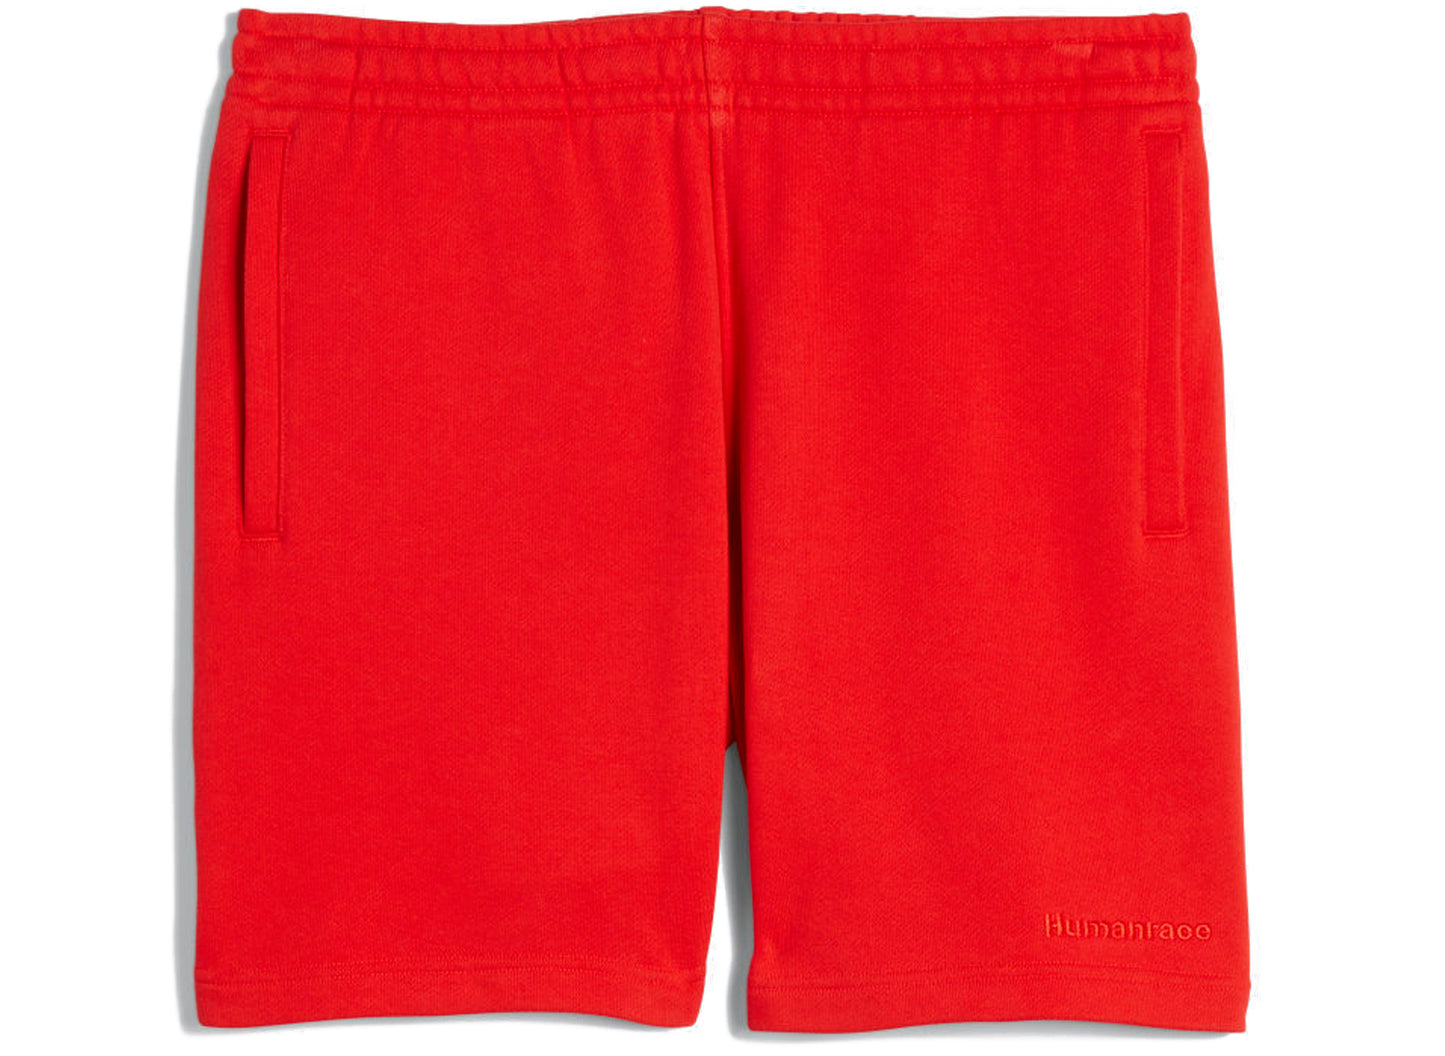 Adidas Pharrell Williams Basics Shorts in Vivid Red